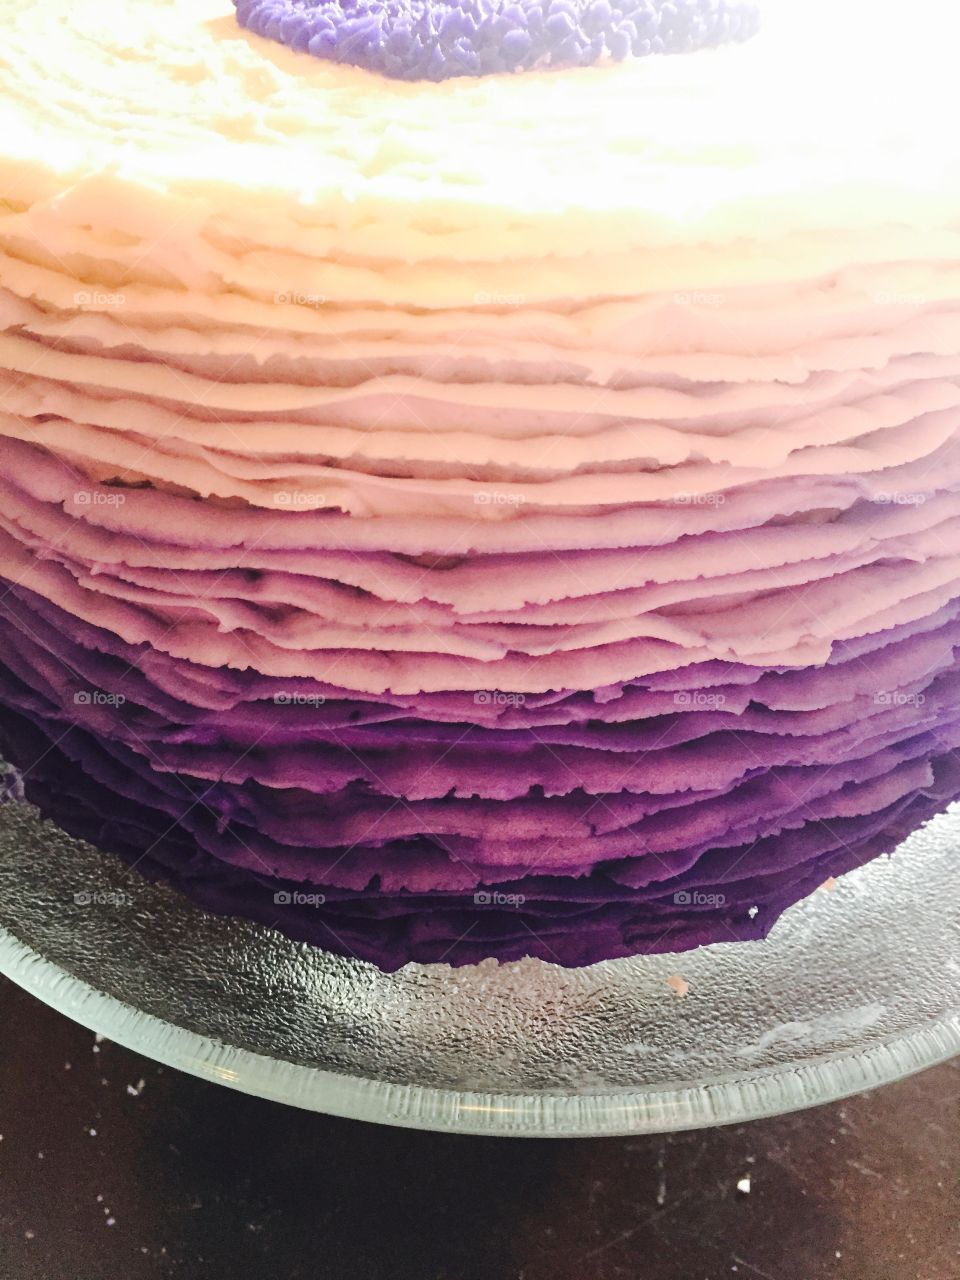 Buttercream ruffles. Rose tip cake decorating